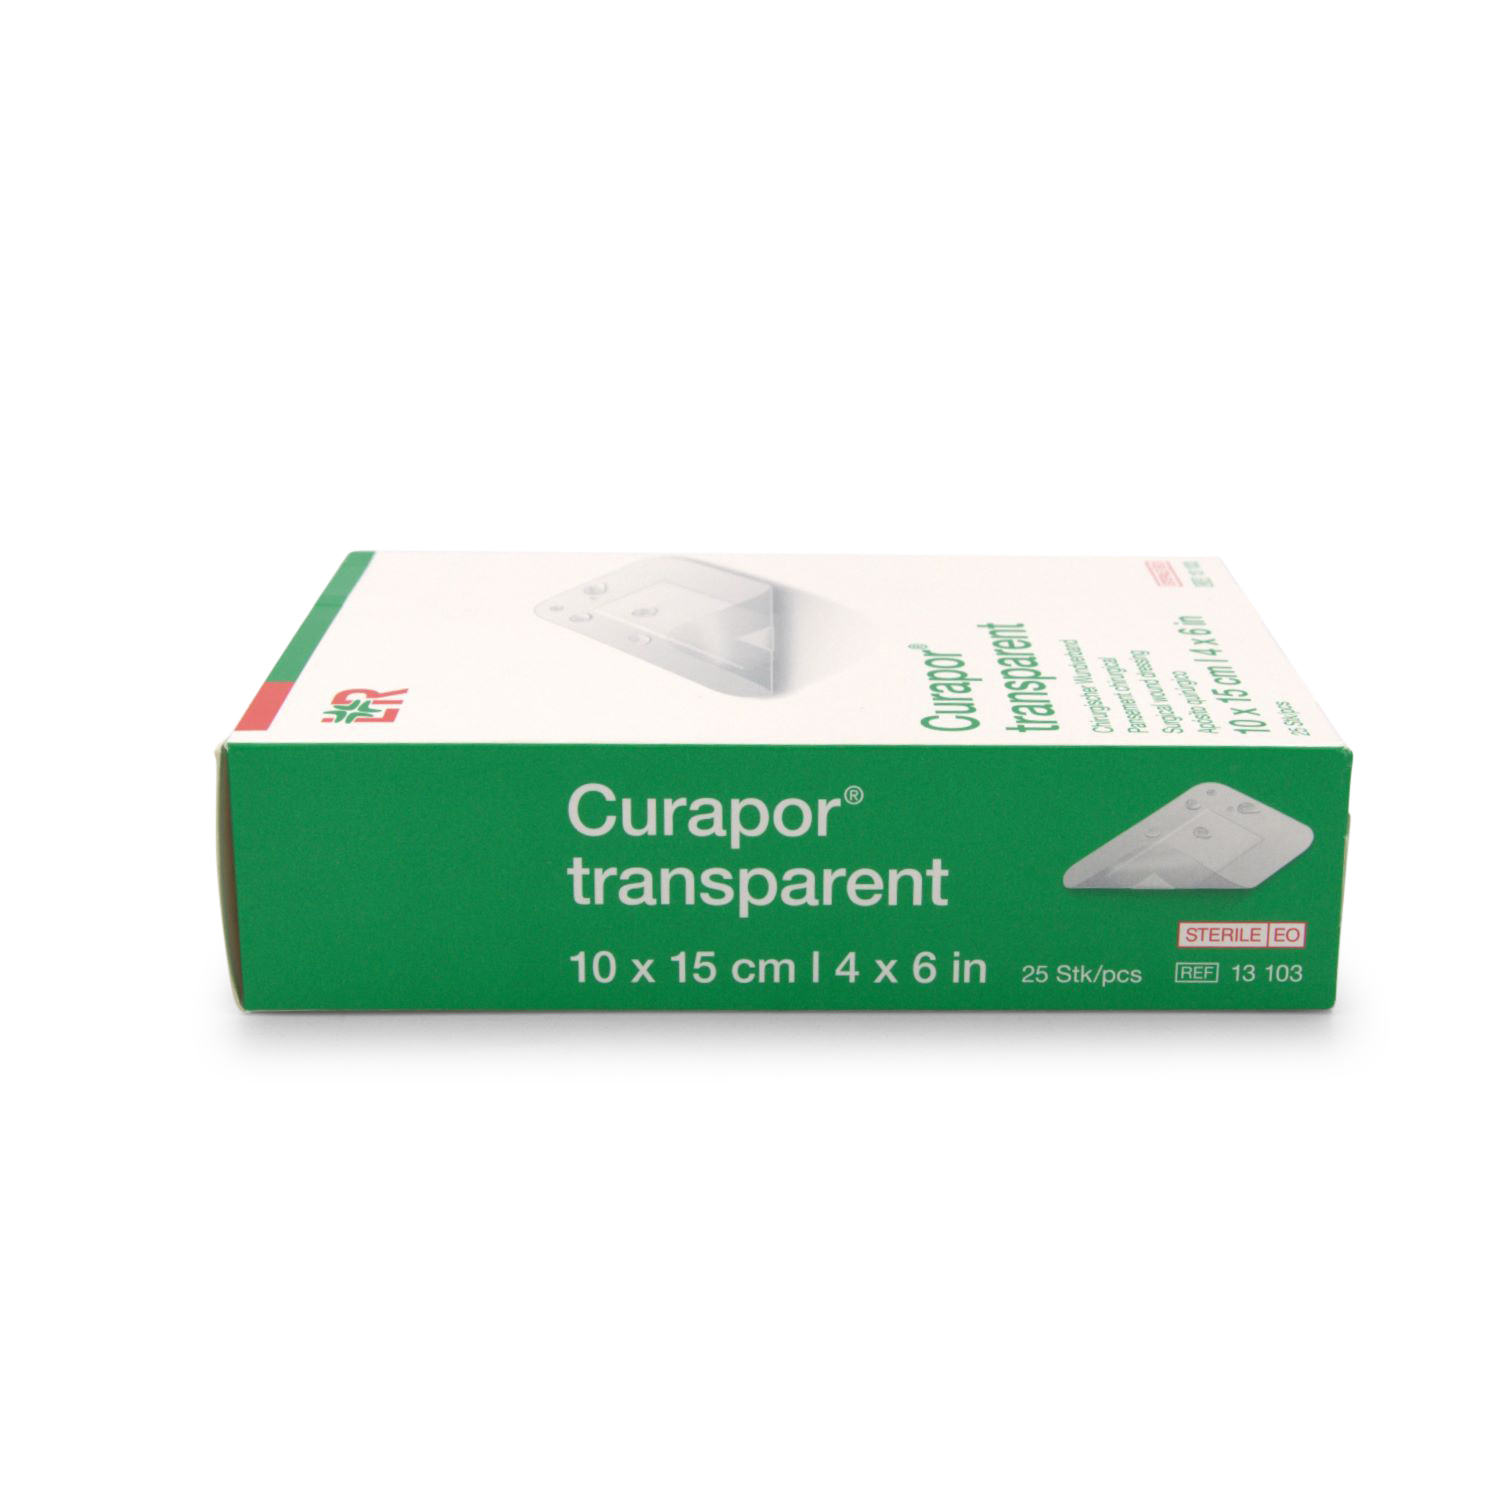 Curapor® Wundverband (10cm x 15cm, transparent, steril)